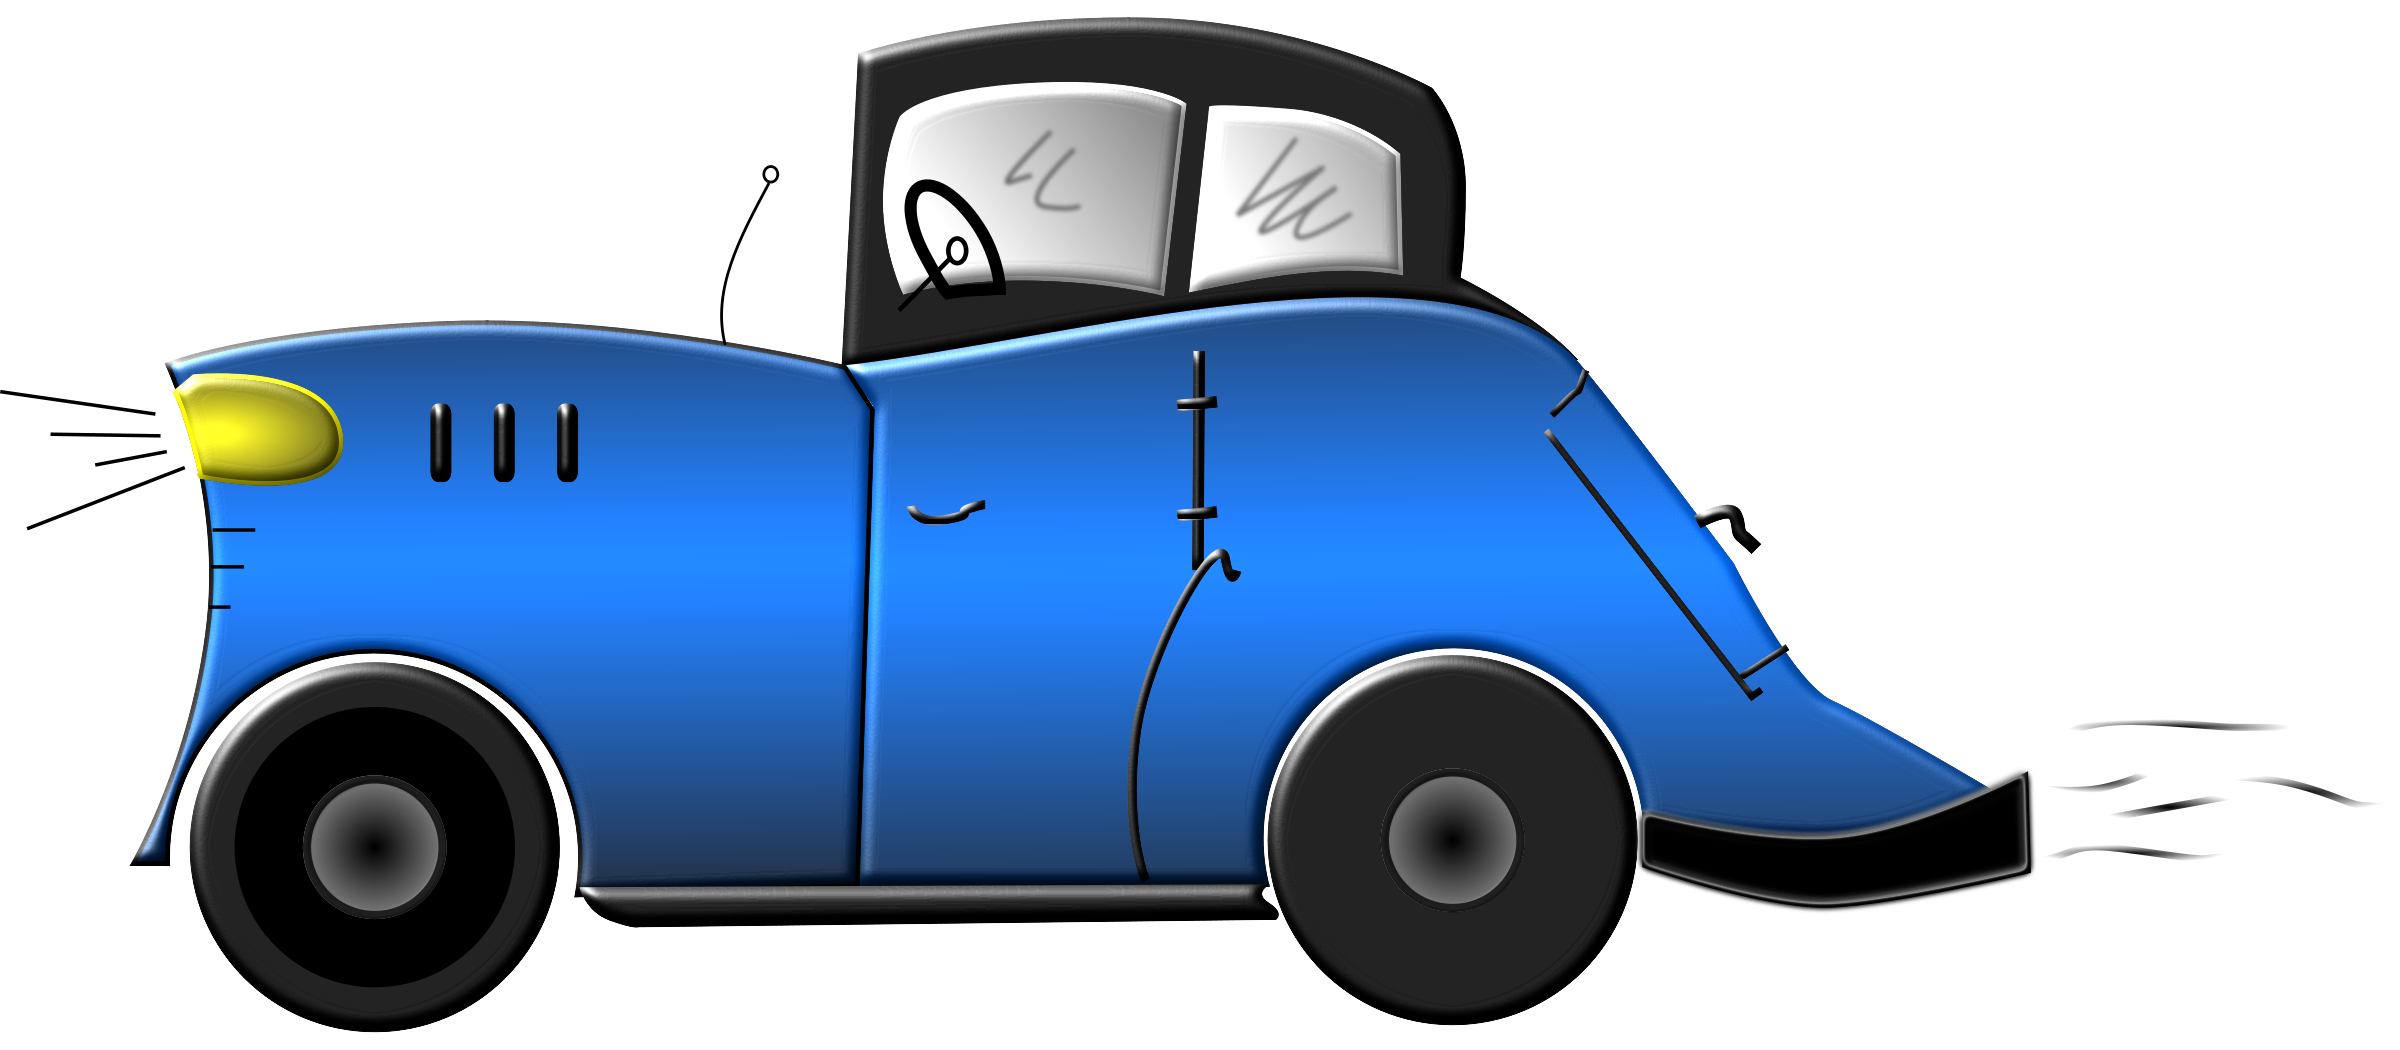 Images Of Cartoon Cars | Free Download Clip Art | Free Clip Art ...